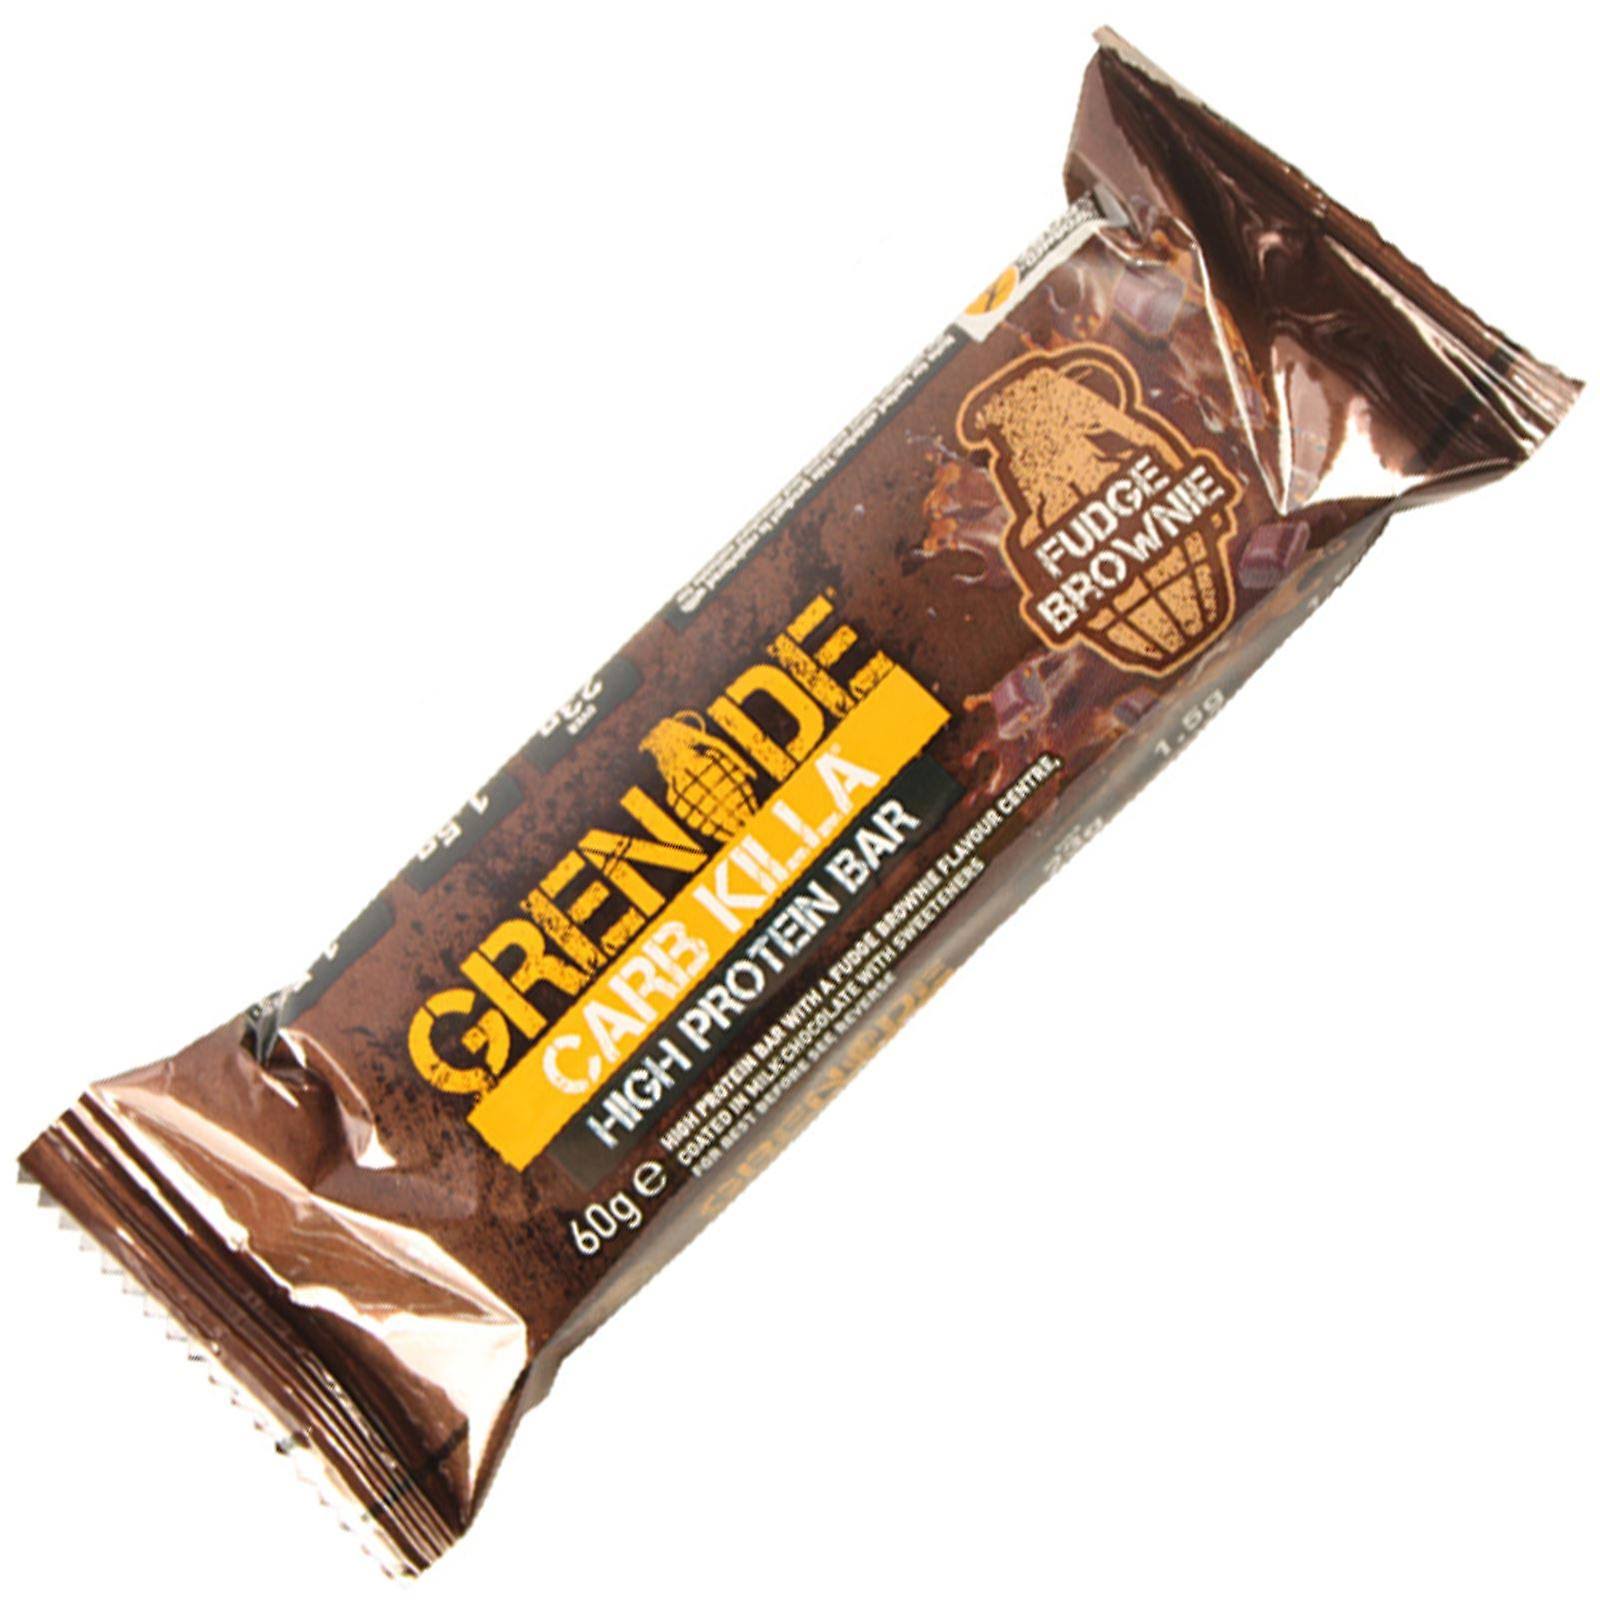 Grenade Carb Killa High Protein Bar - Fudge Brownie, 60g